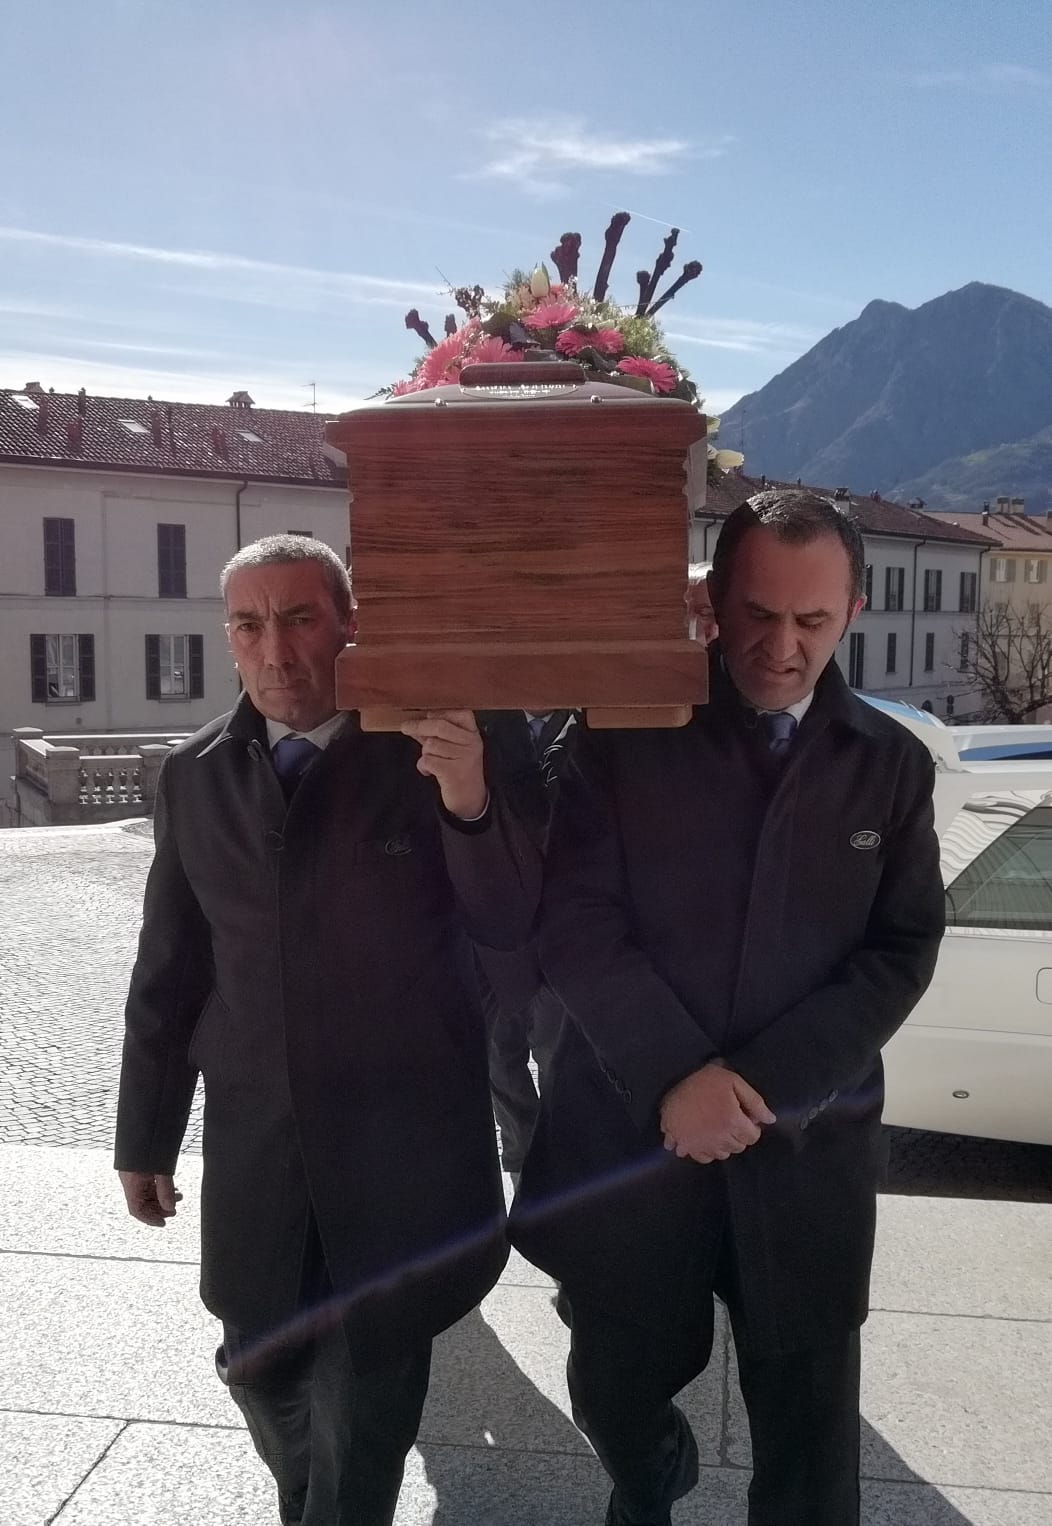 funerali_Agnese_Mirri